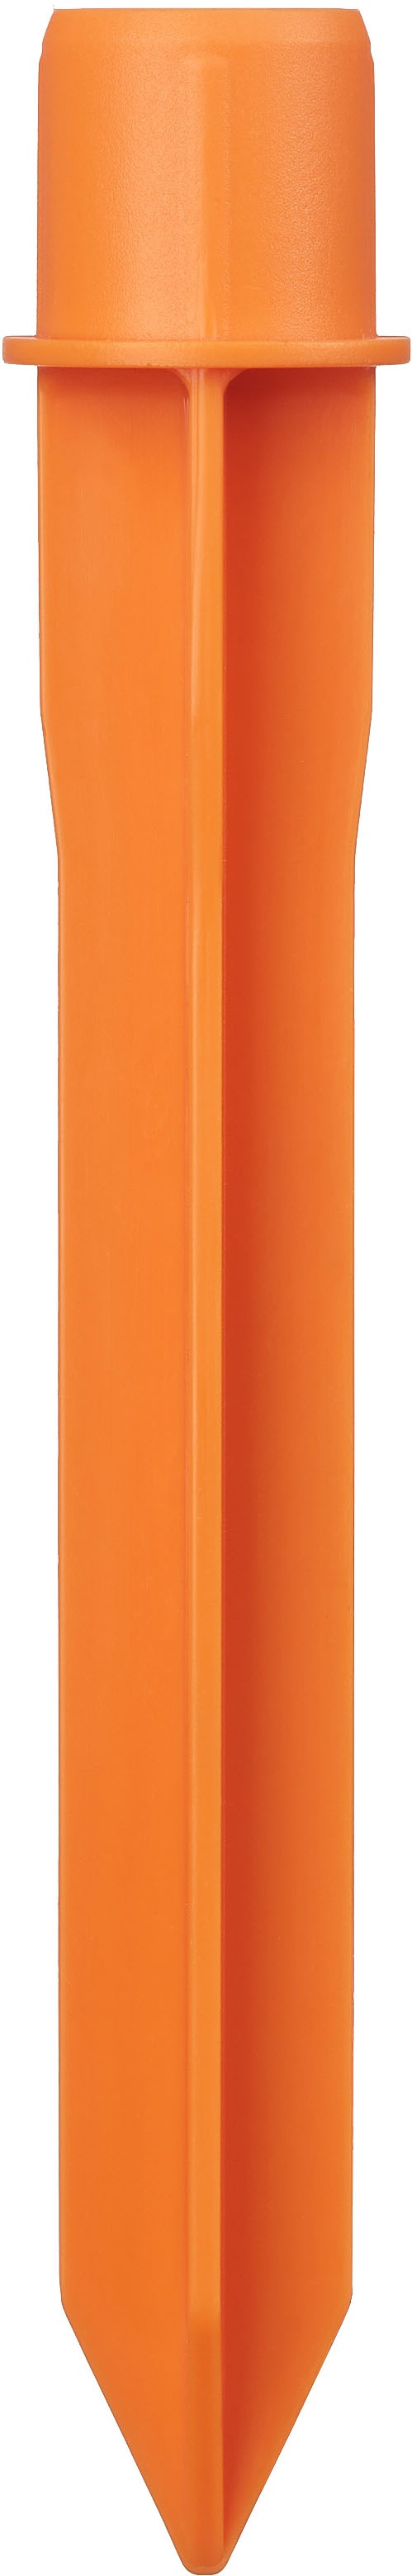 BONETTI LED Gartenfackel, LED Solar Gartenfackel orange mit realer Flamme orange Rabatt: 34 %